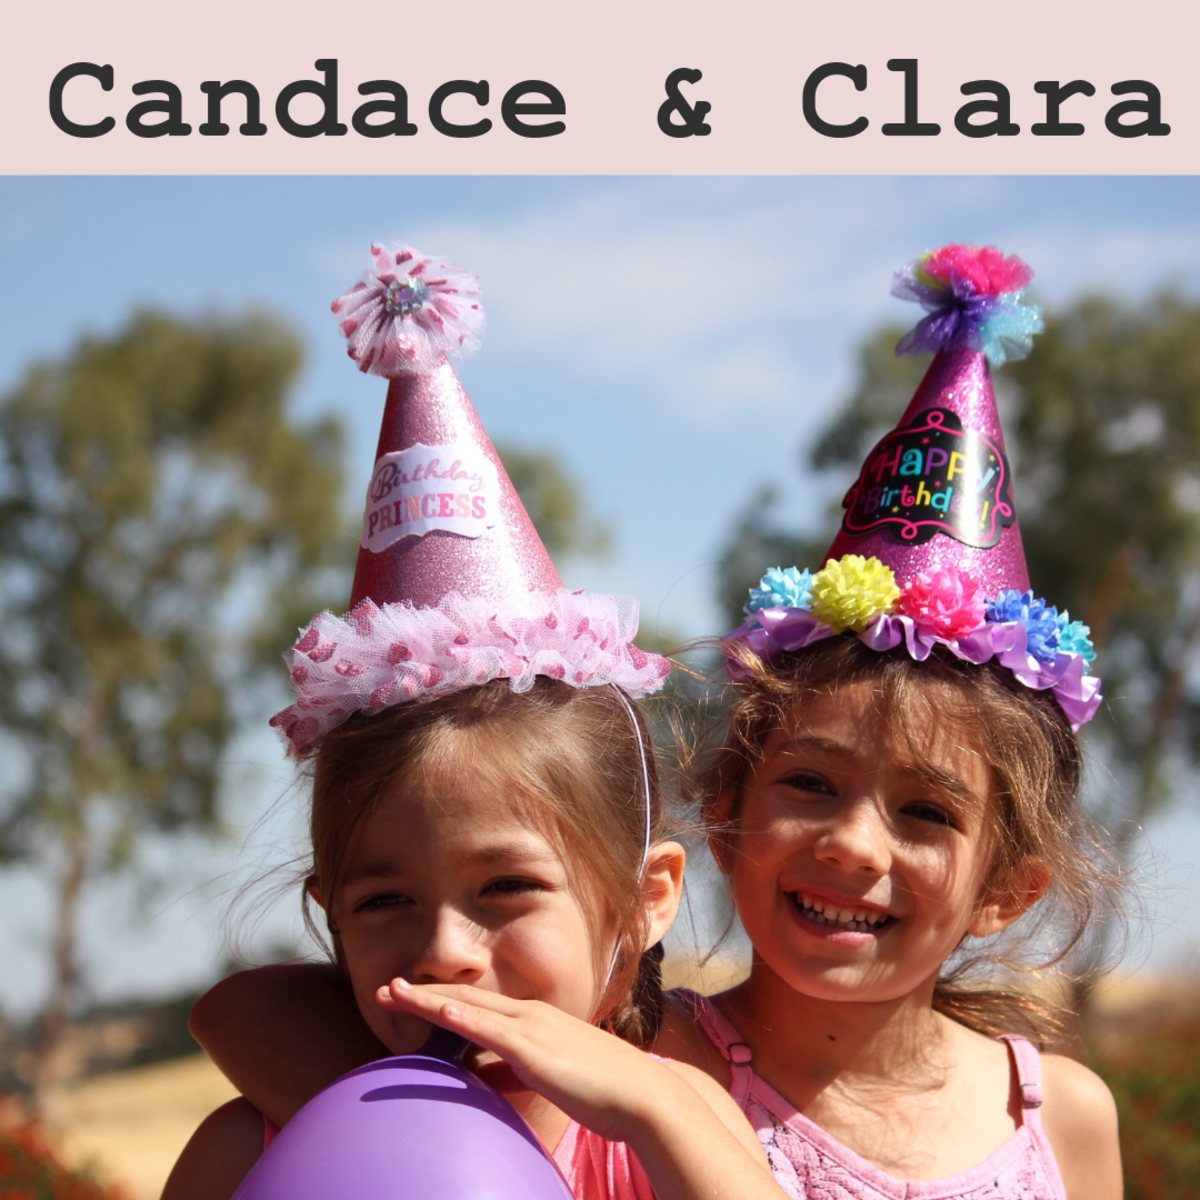 Candace and Clara